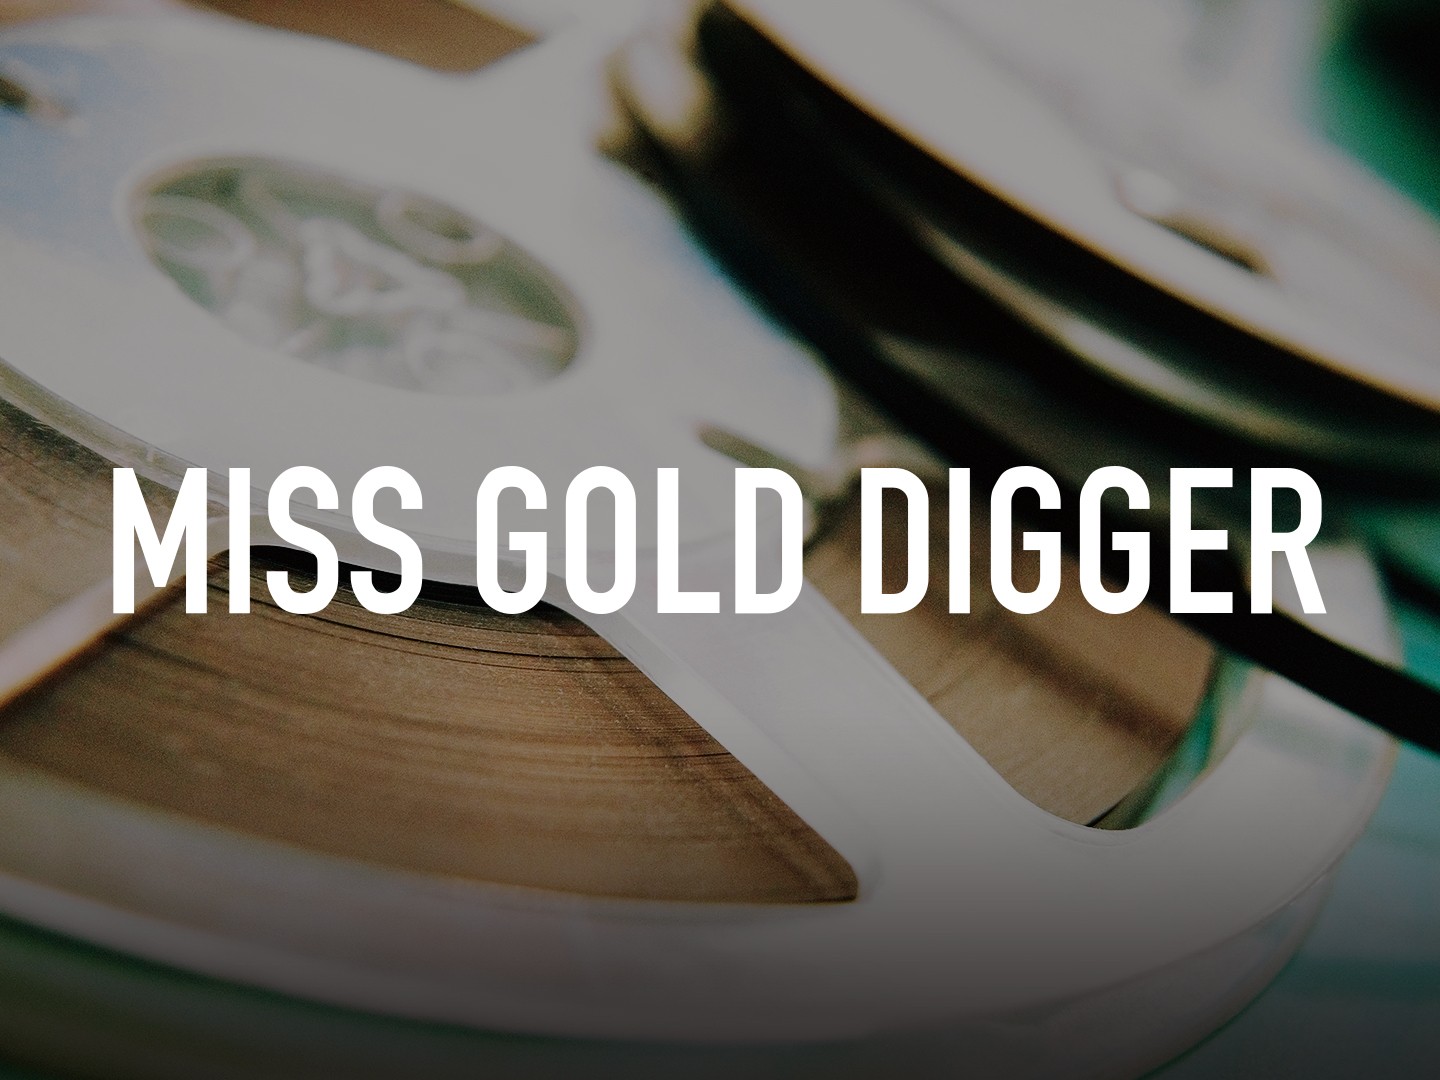 Miss Gold Digger - Wikipedia